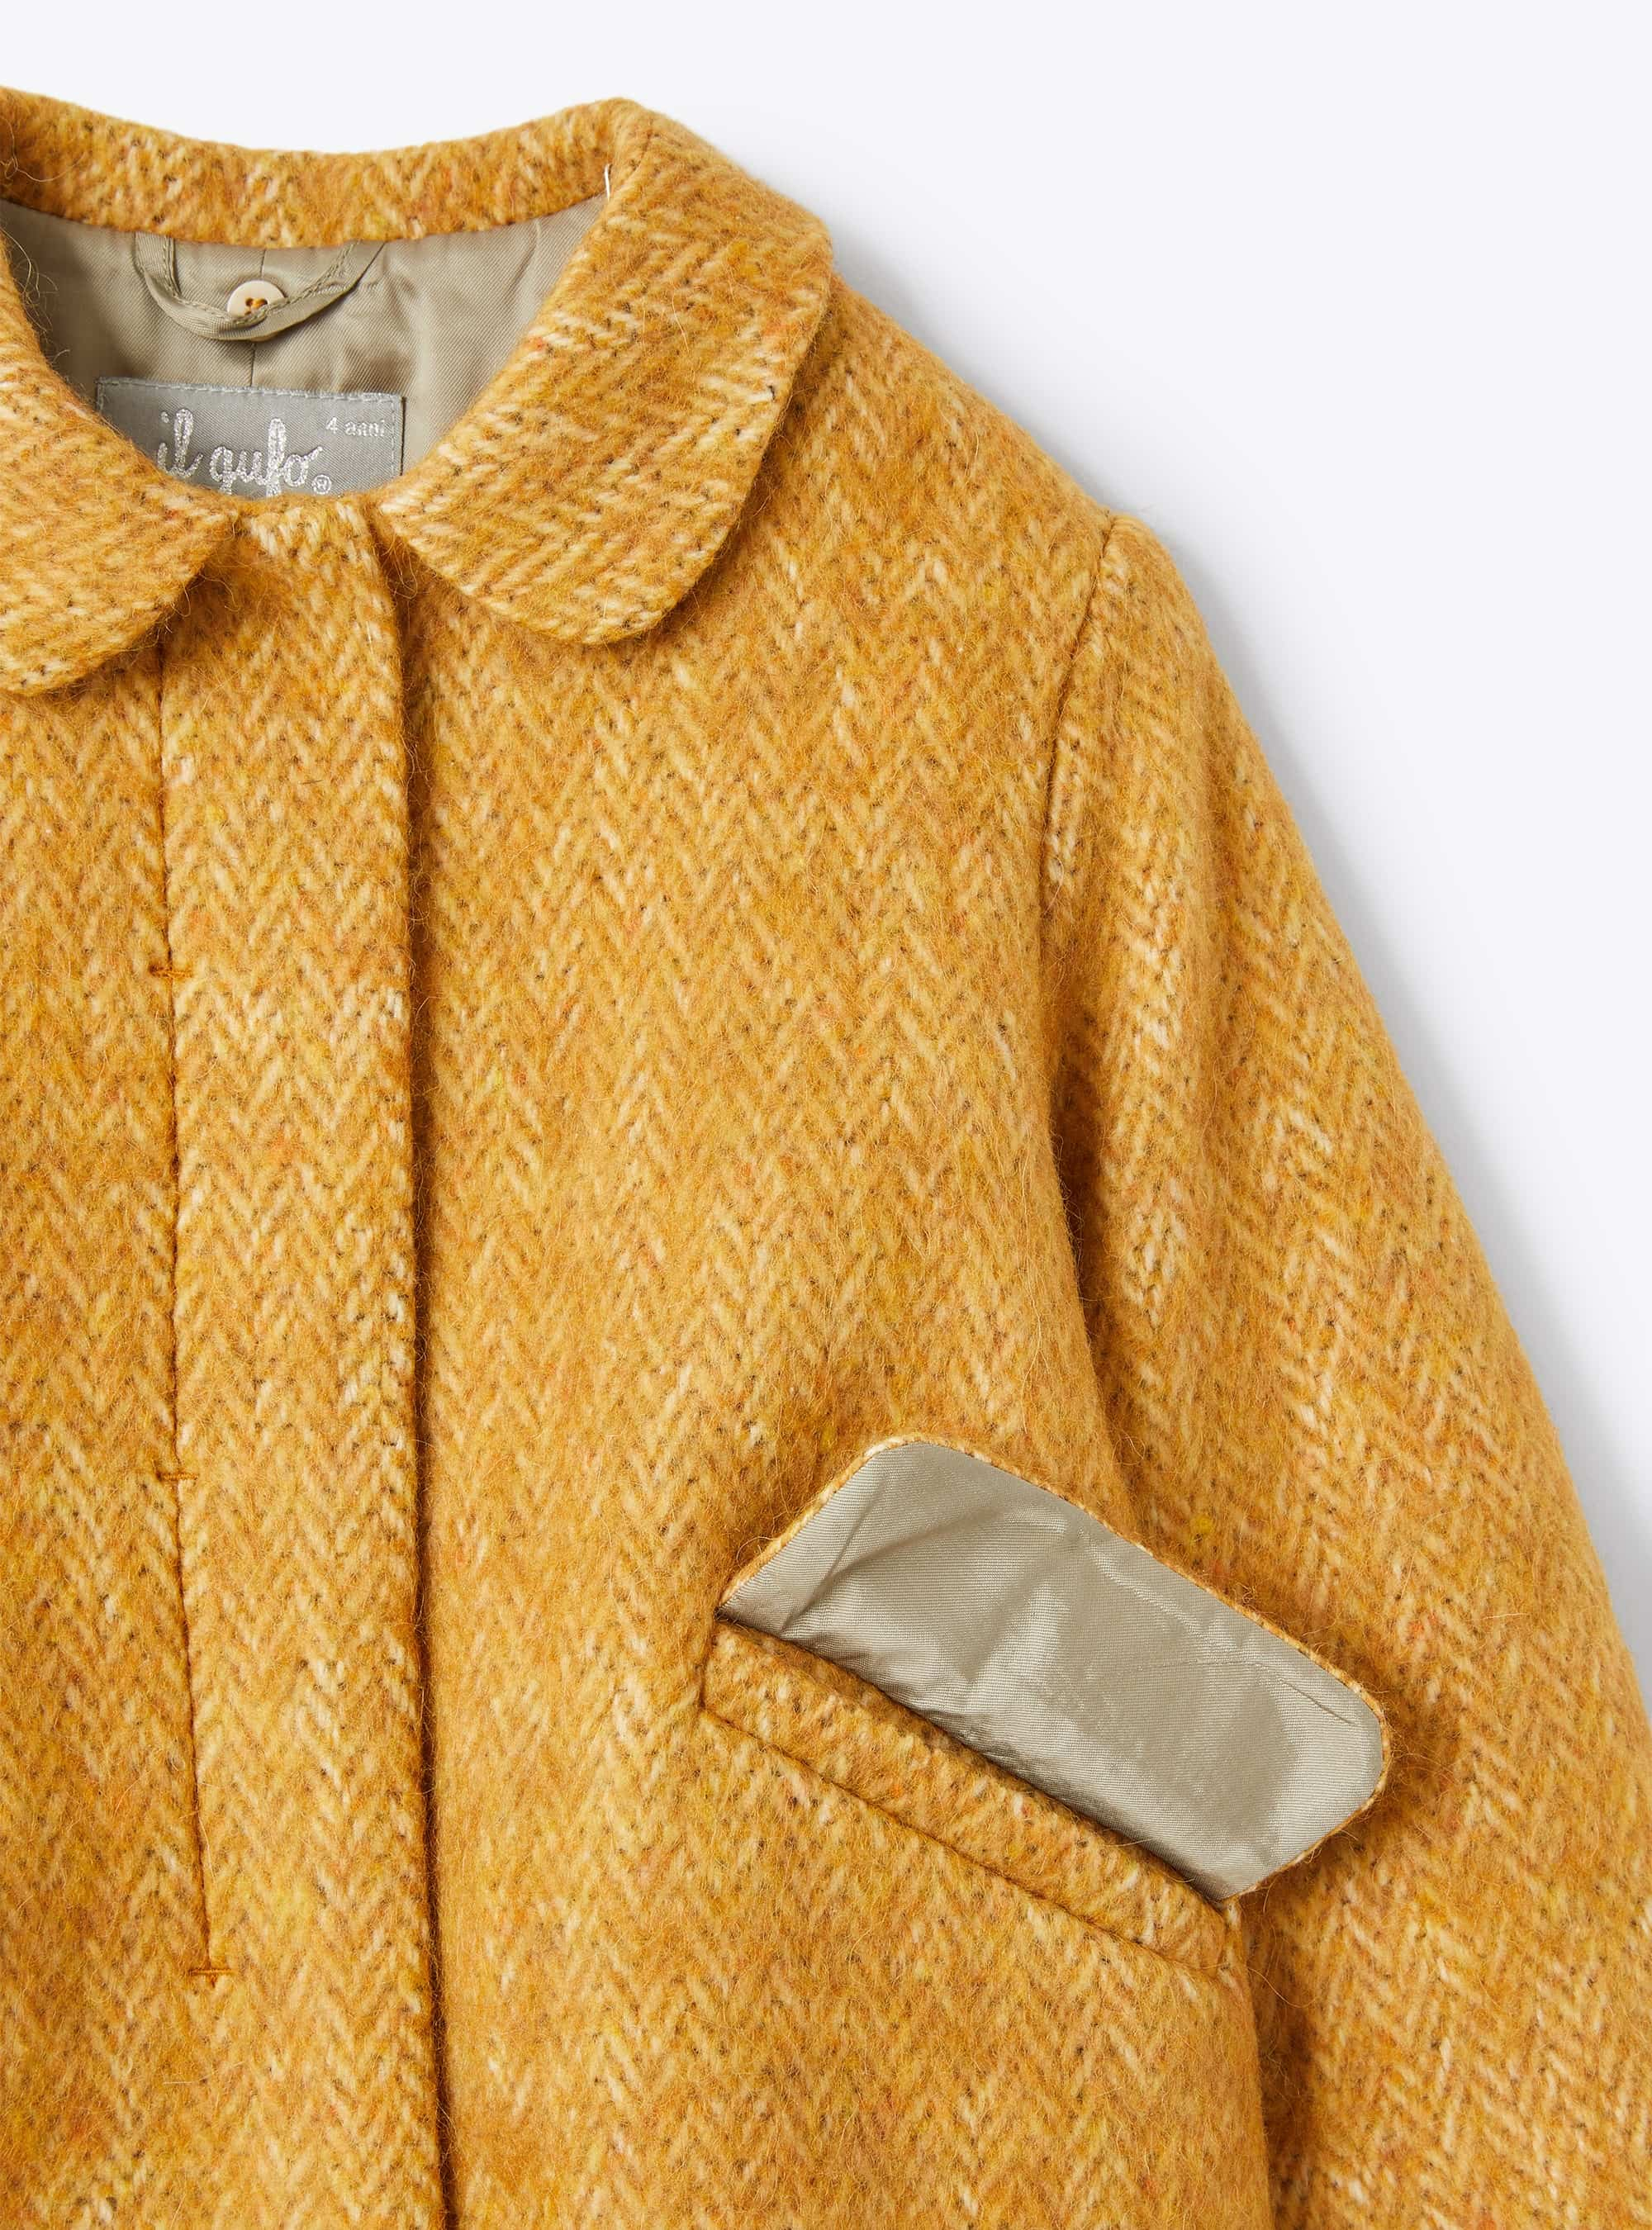 Manteau en tissu à chevrons jaune - Beige | Il Gufo